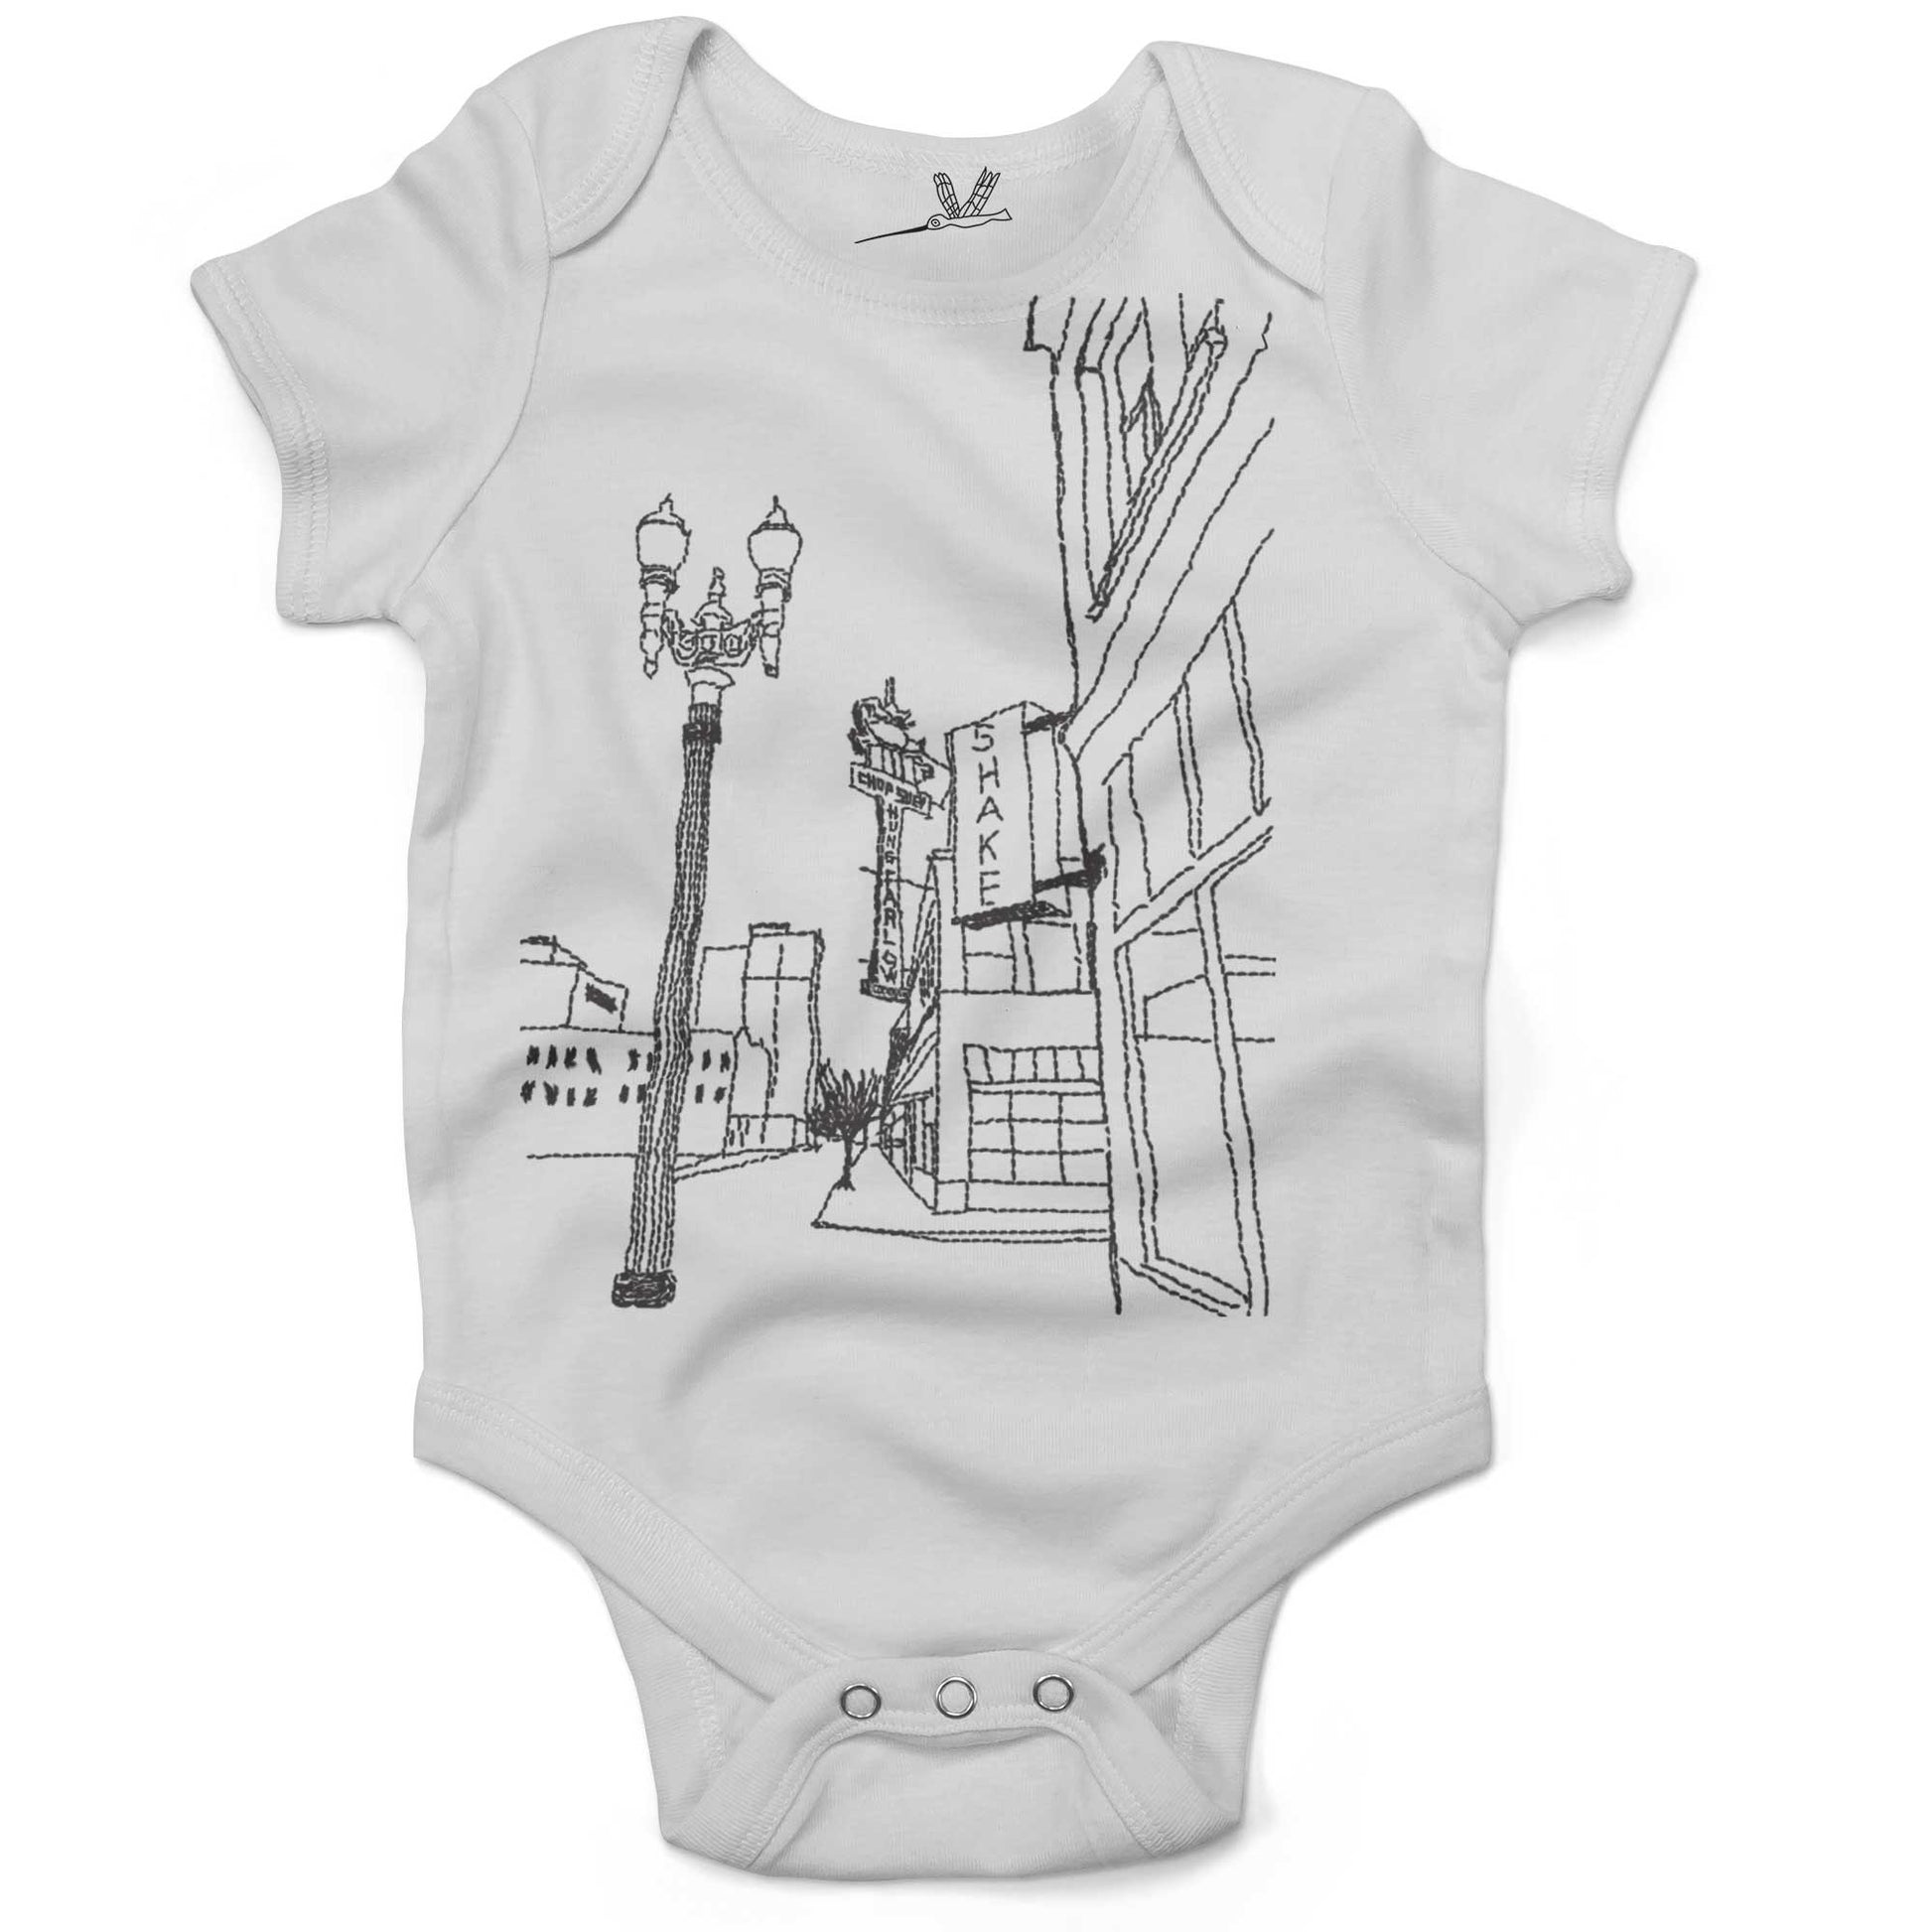 Hung Far Low Restaurant Infant Bodysuit-White-3-6 months